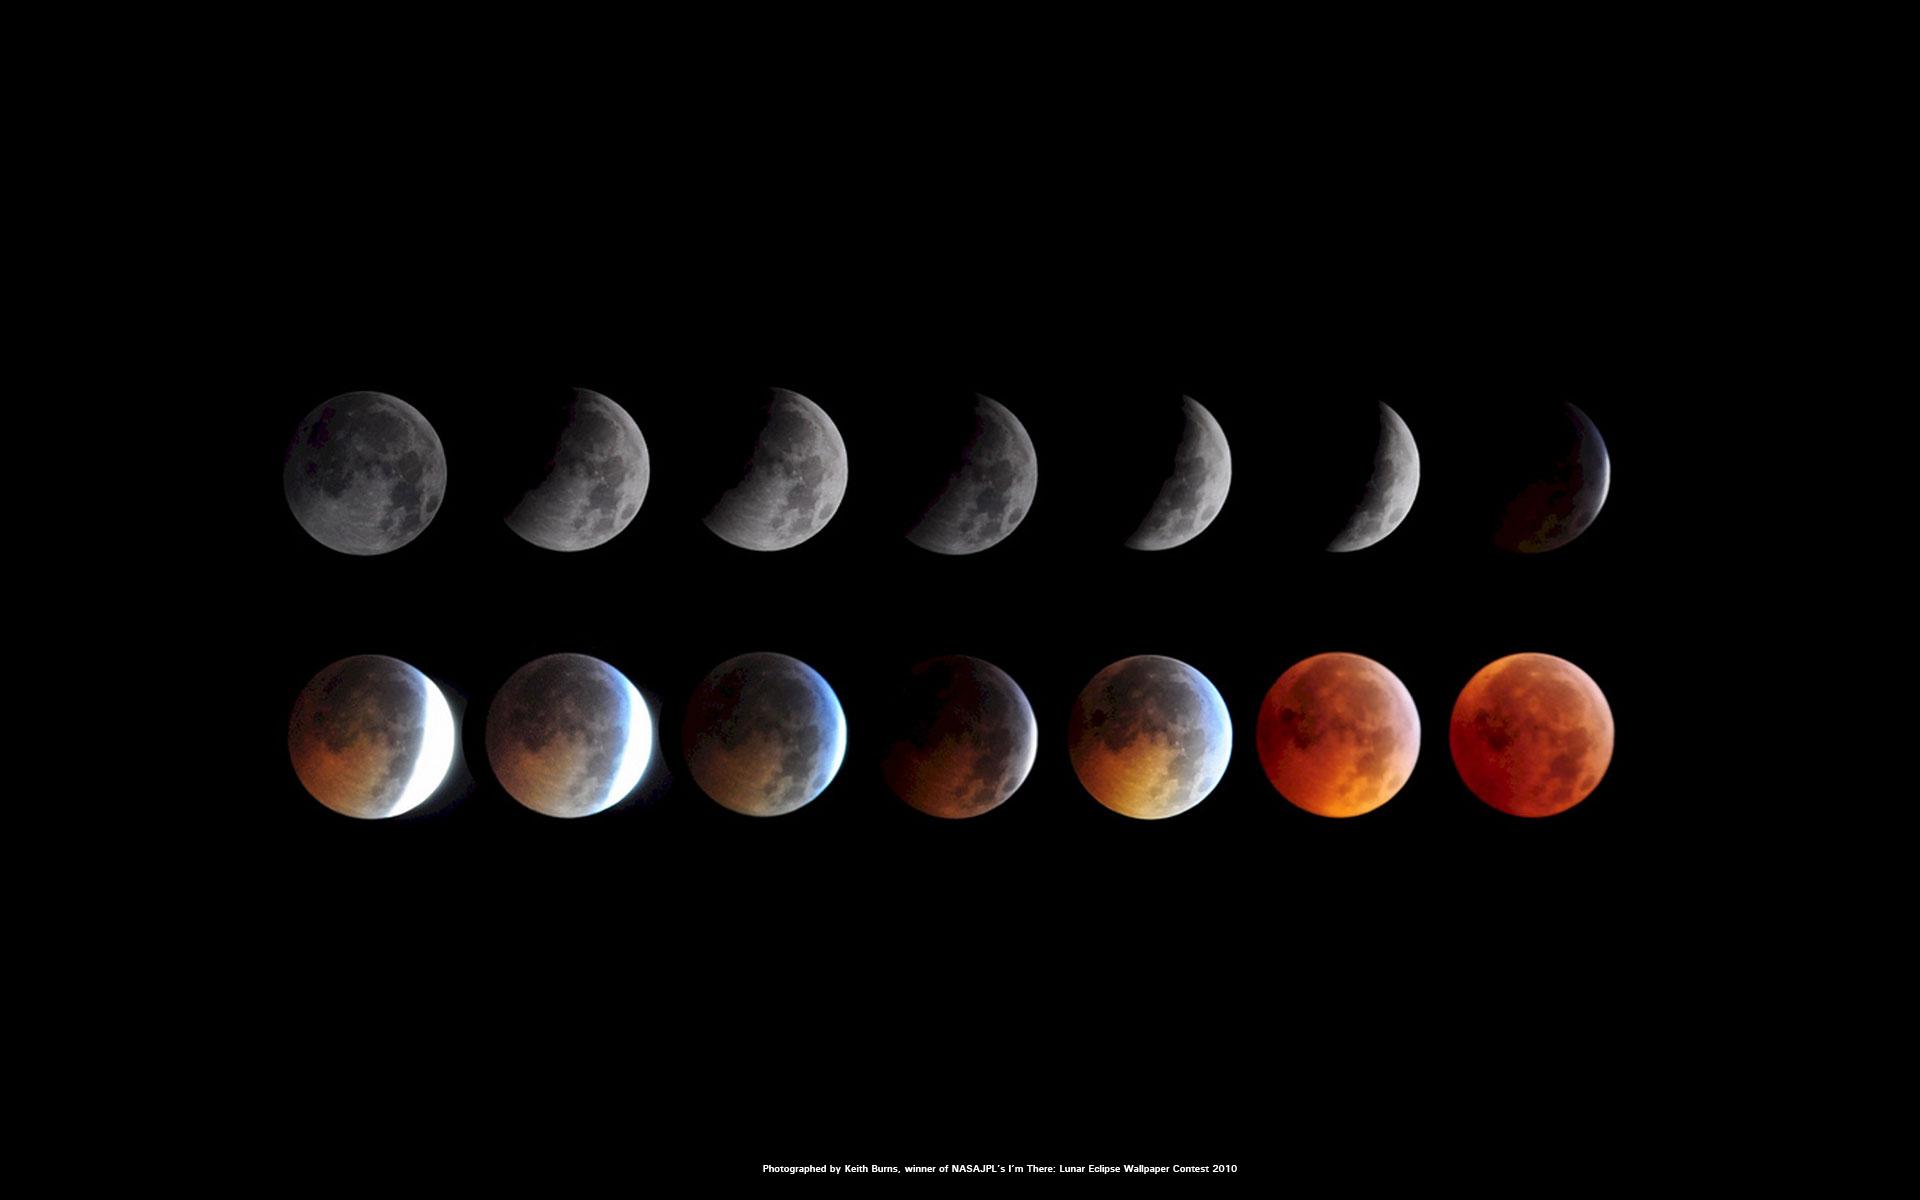 Total Lunar Eclipse of 2010 Space Wallpaper. NASA